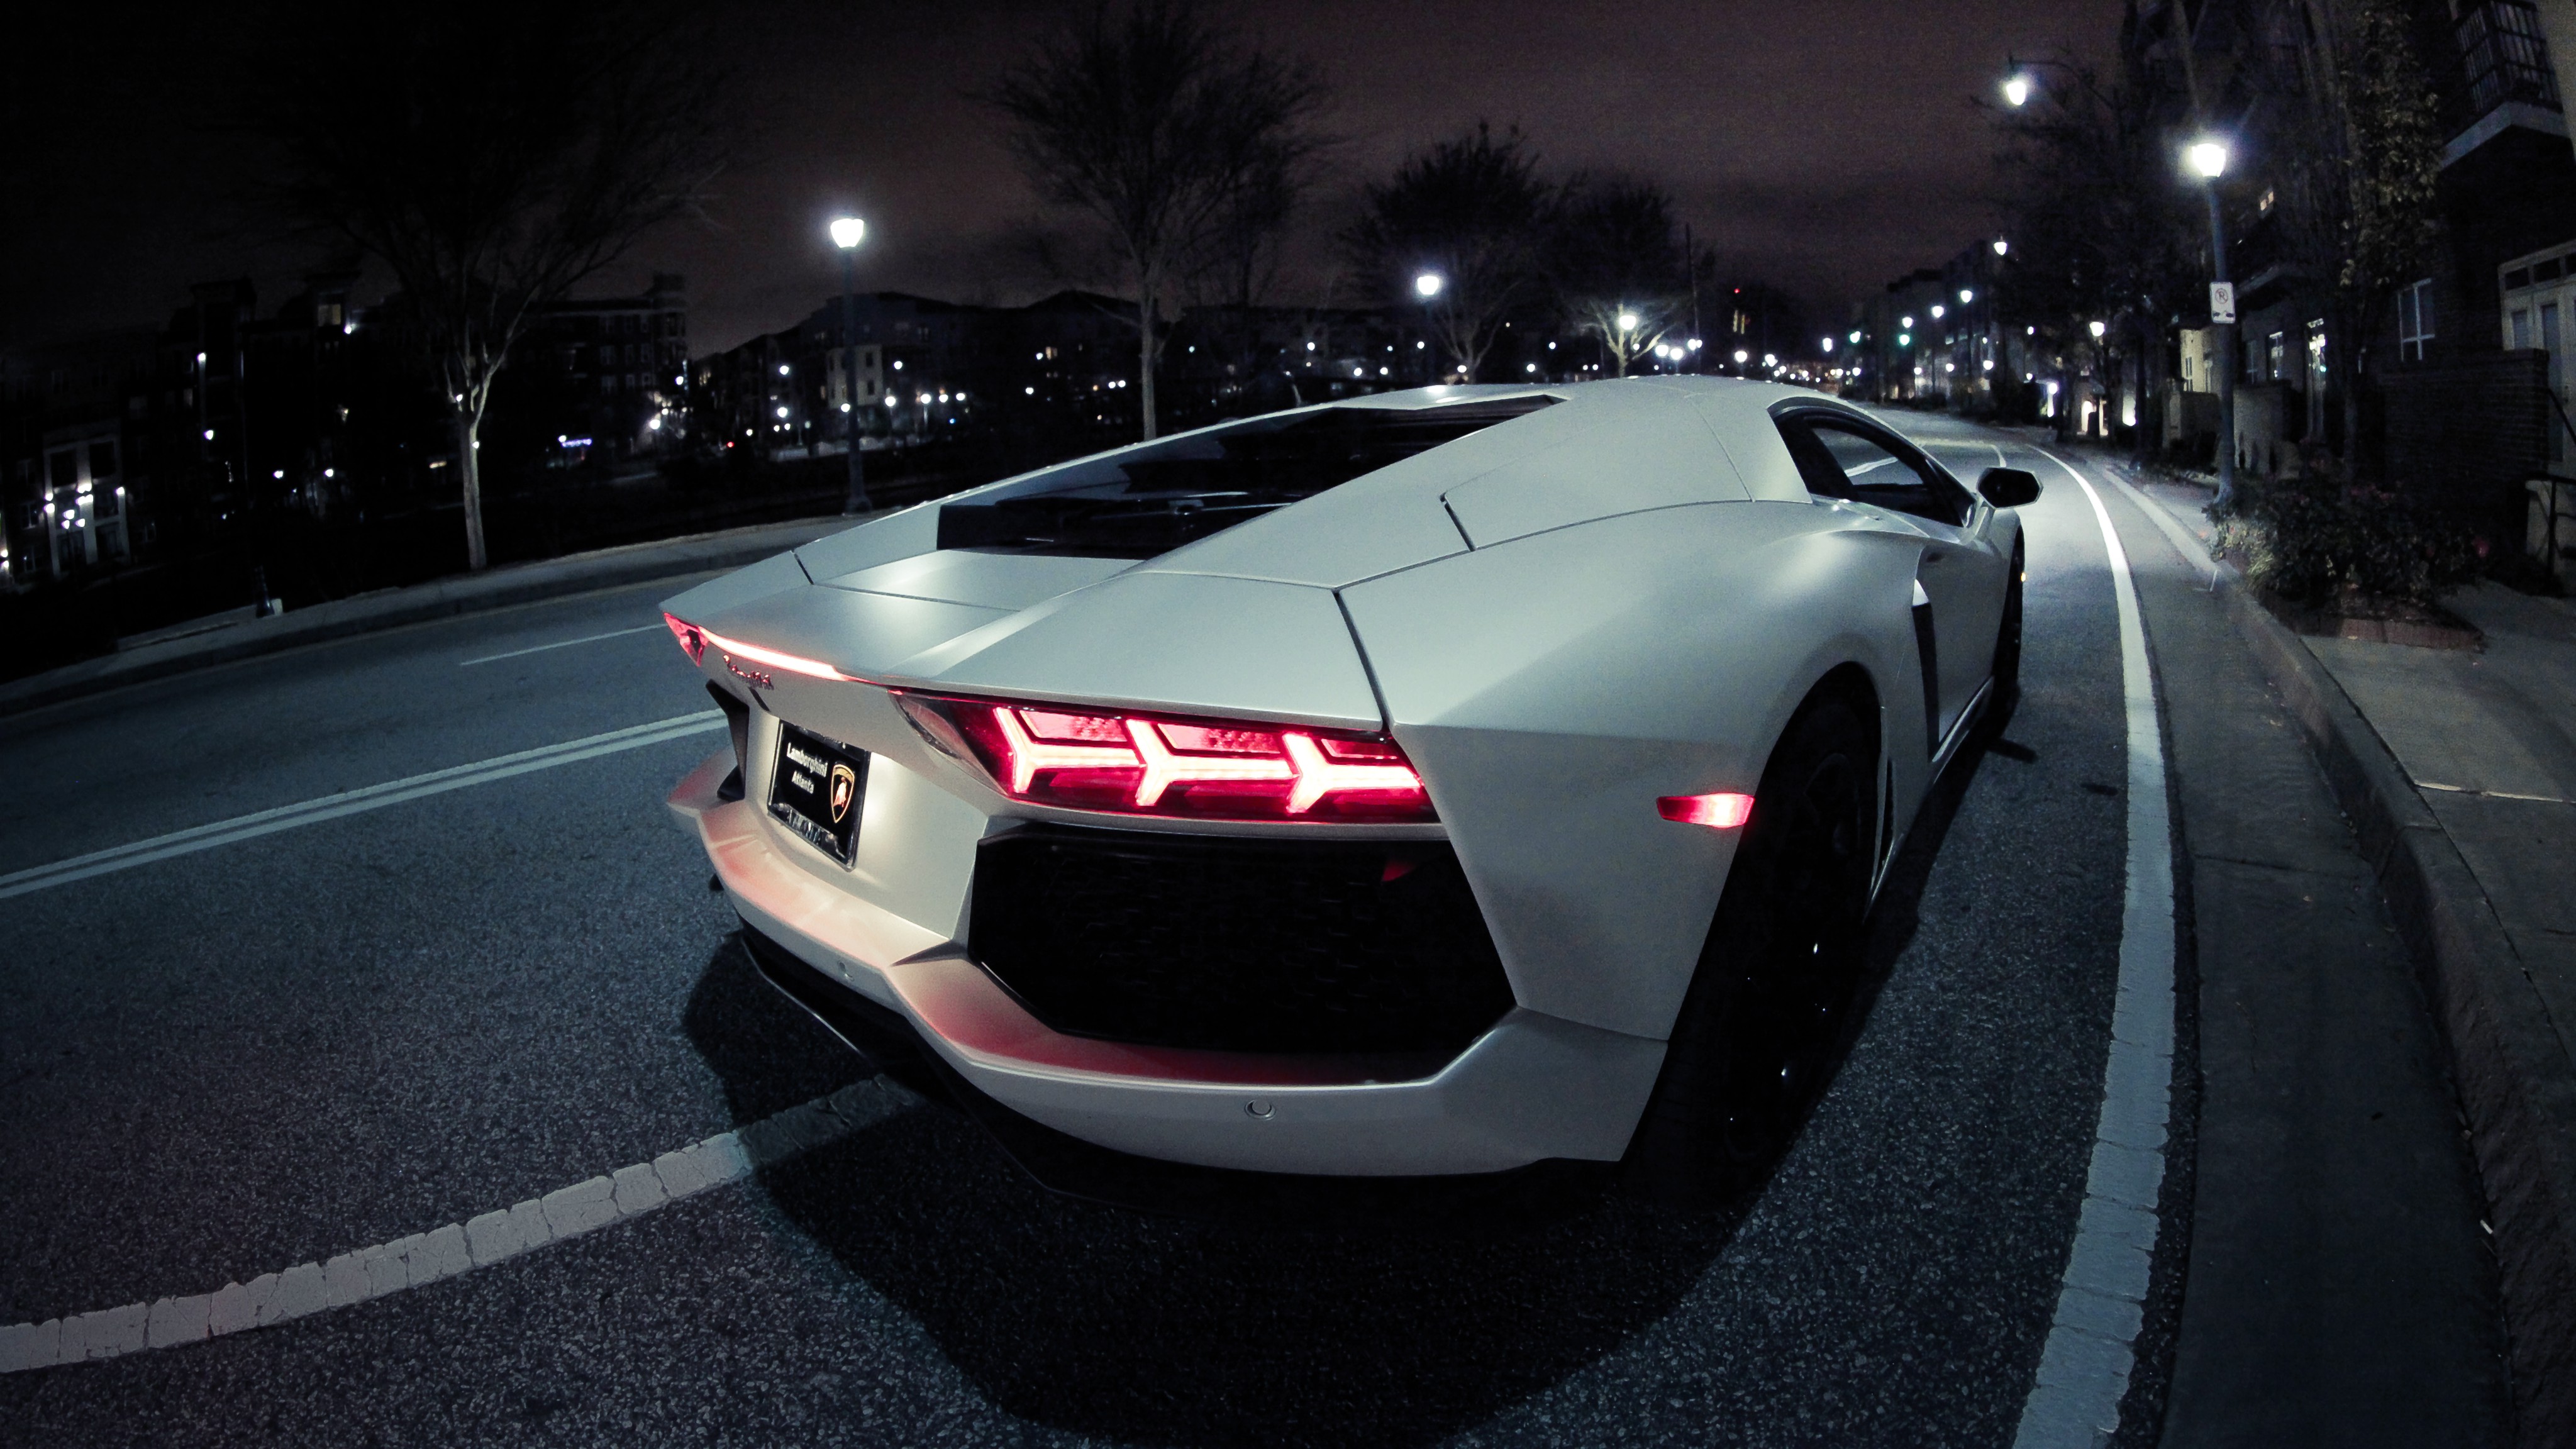 Lamborghini Aventador on HD wallpapers free downloads.Desktop